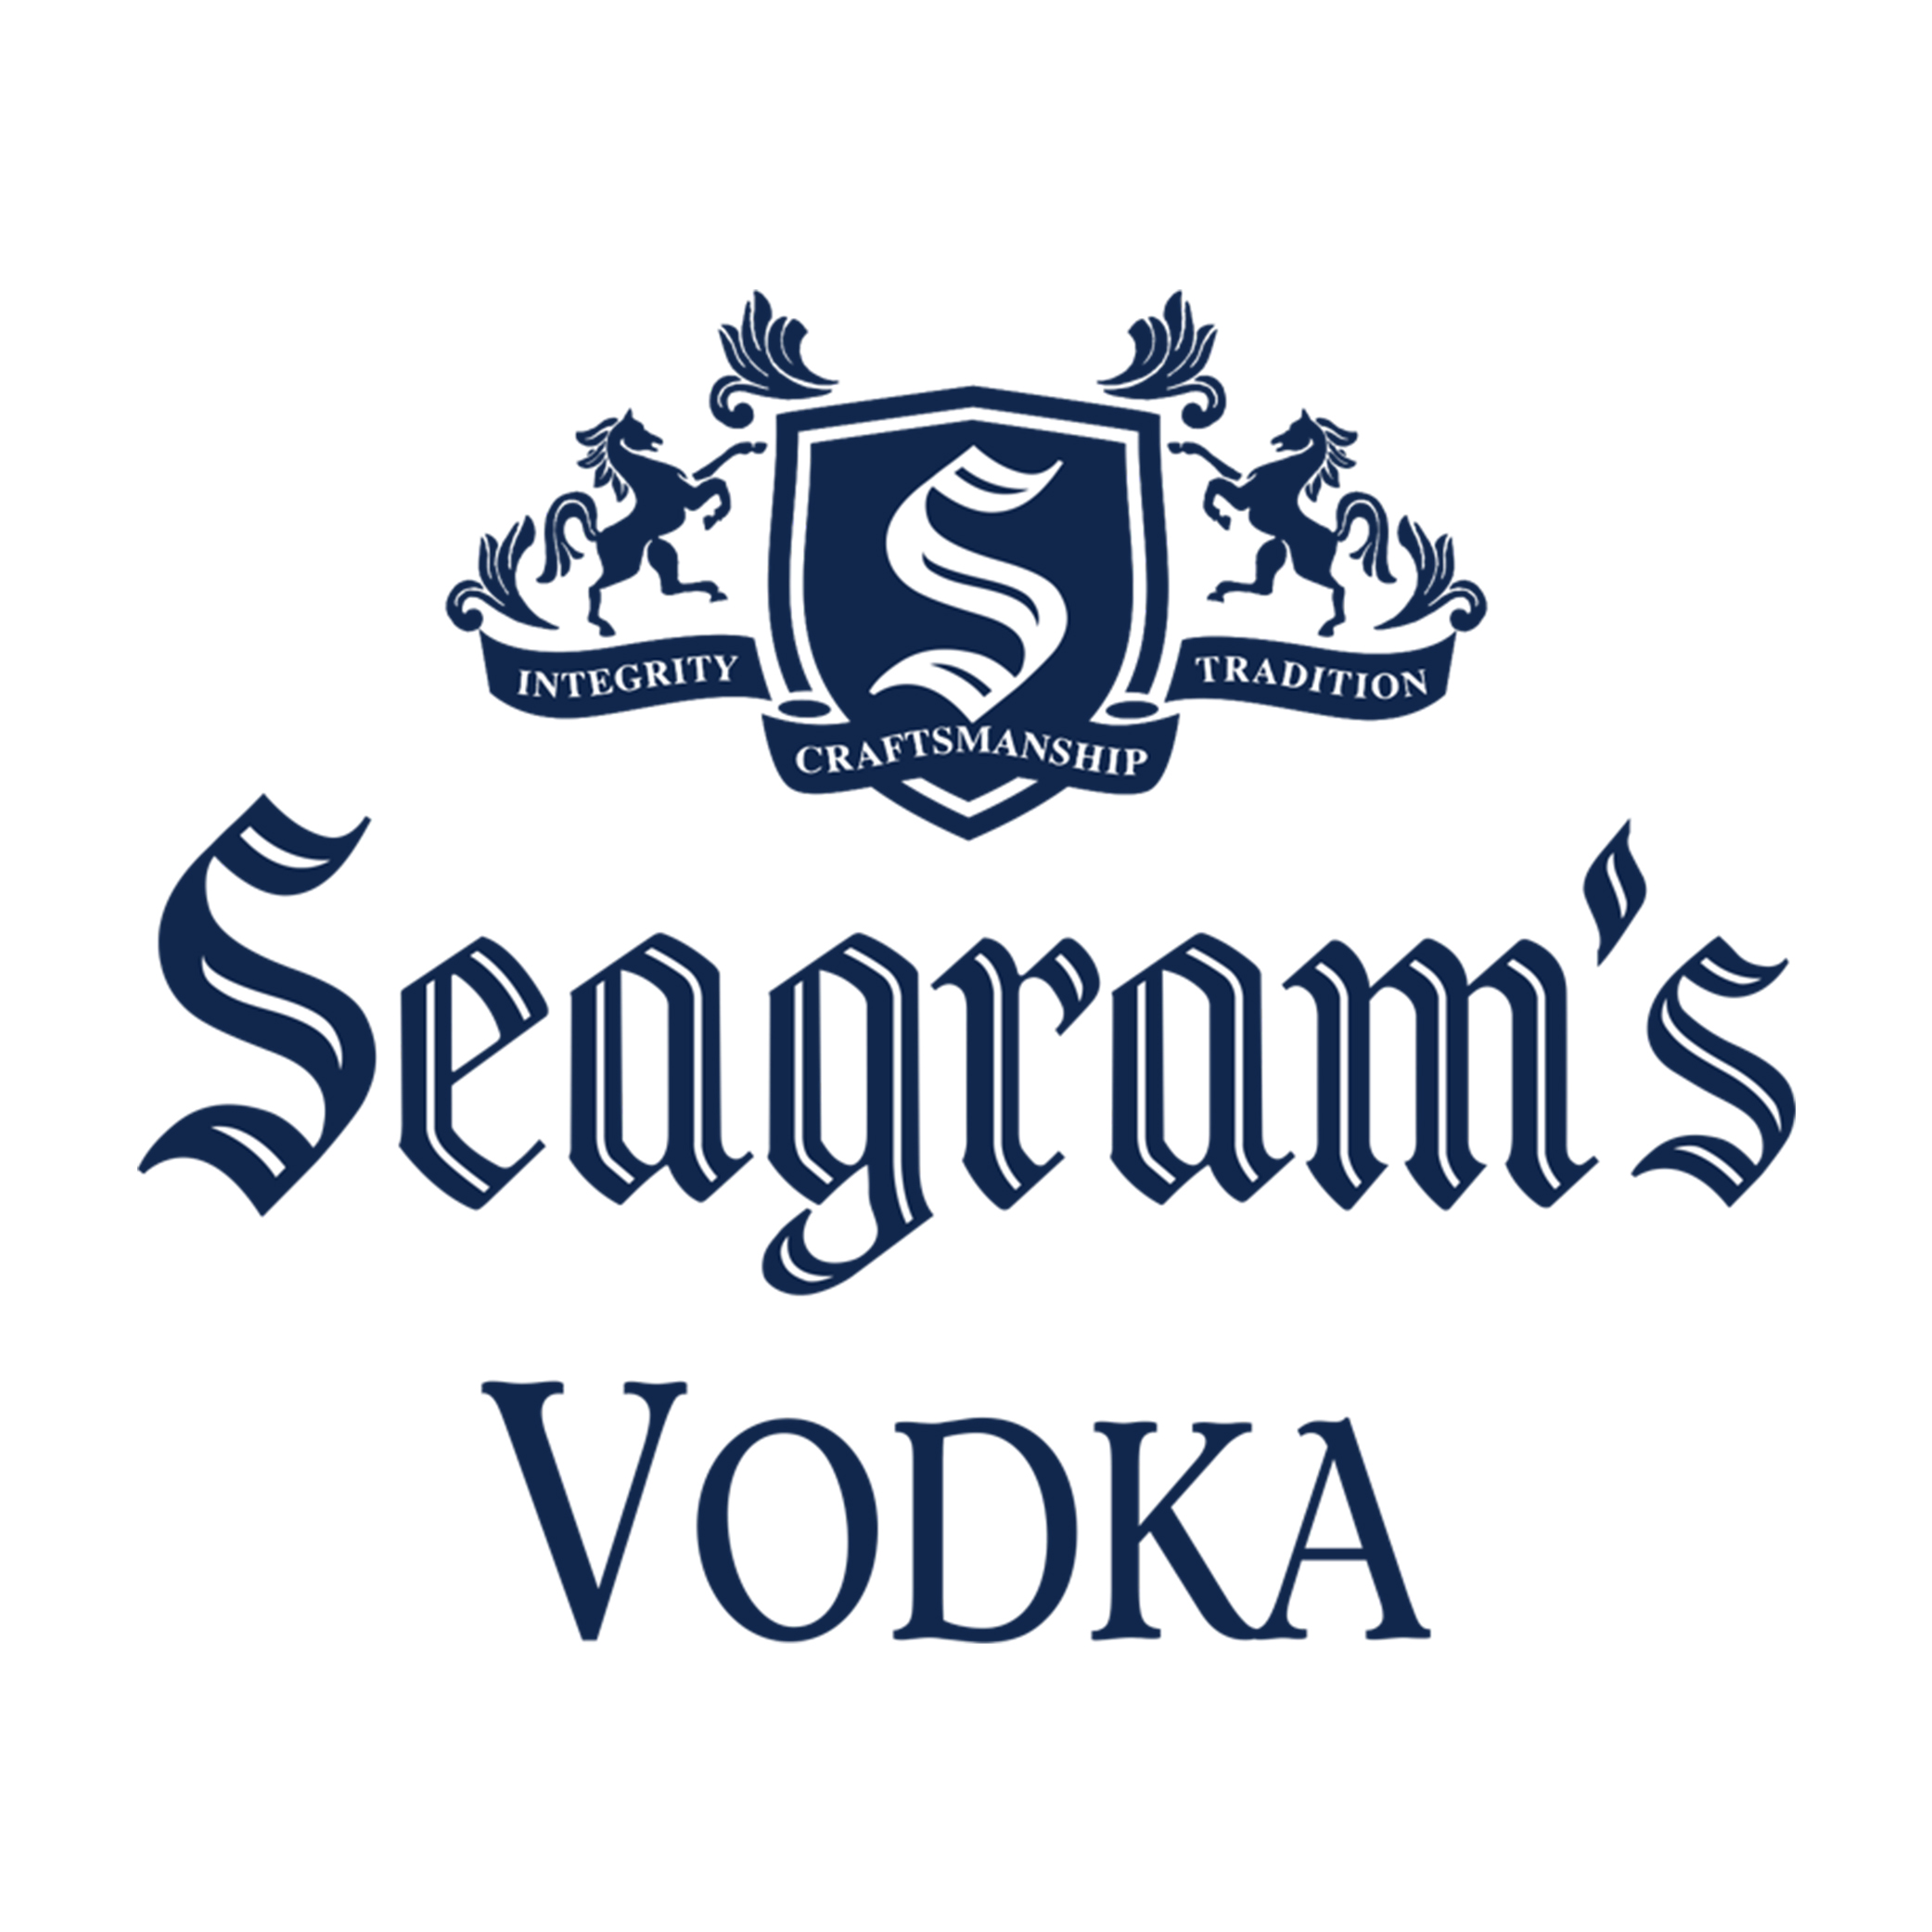 Pancaniaga Indoperkasa - Seagram's Vodka